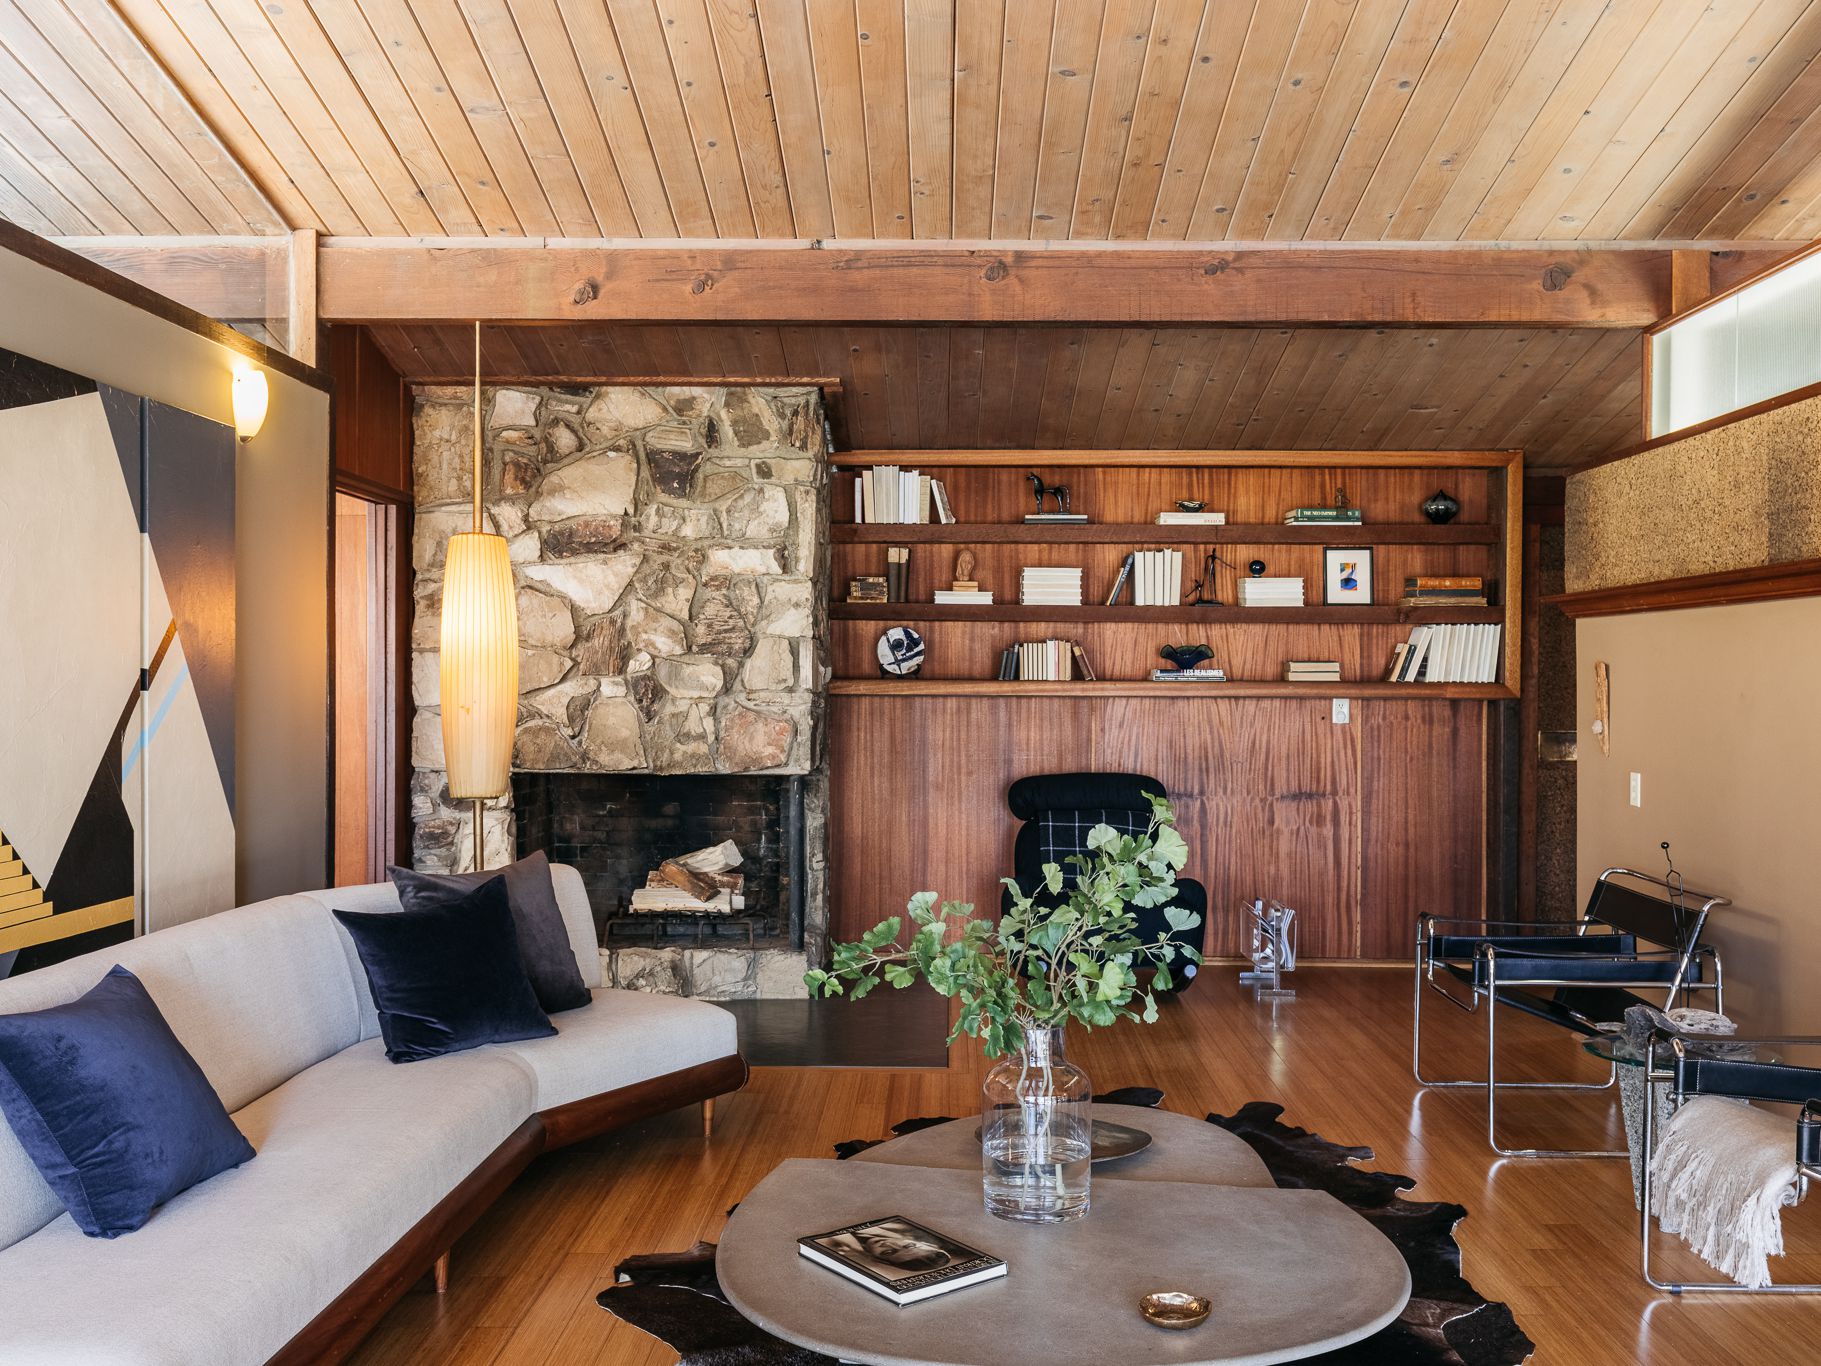 Create a Classic Design in Your Interior